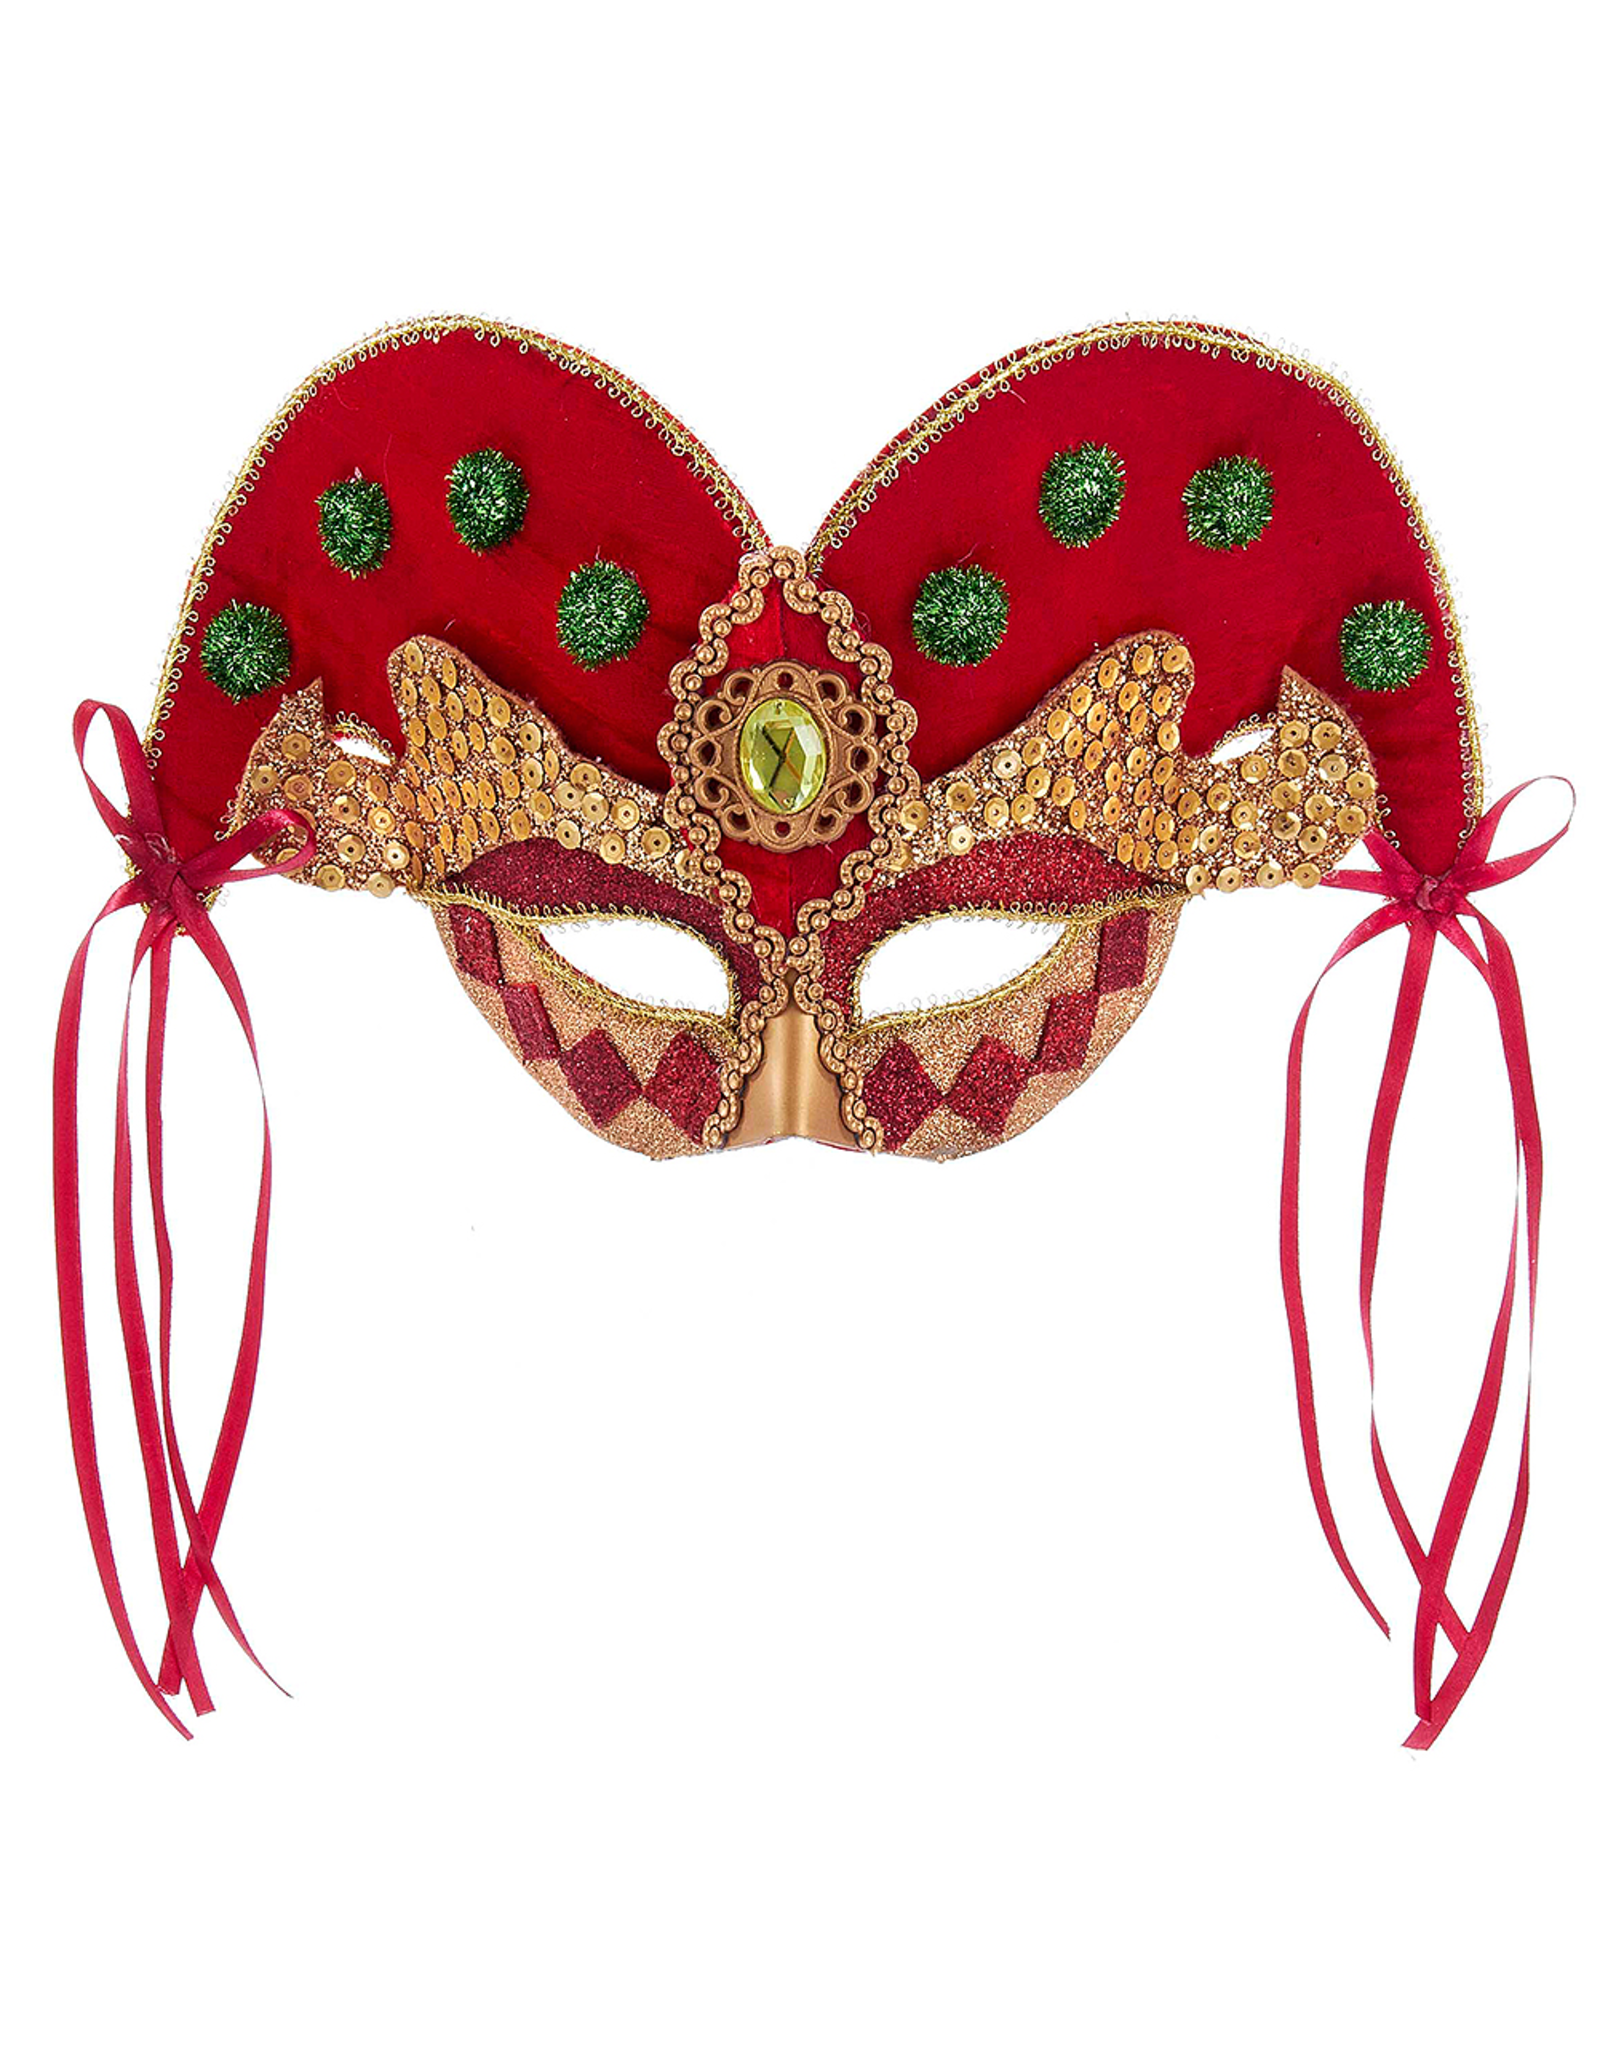 Kurt Adler Red And Gold Harlequin Mask 12 Inch